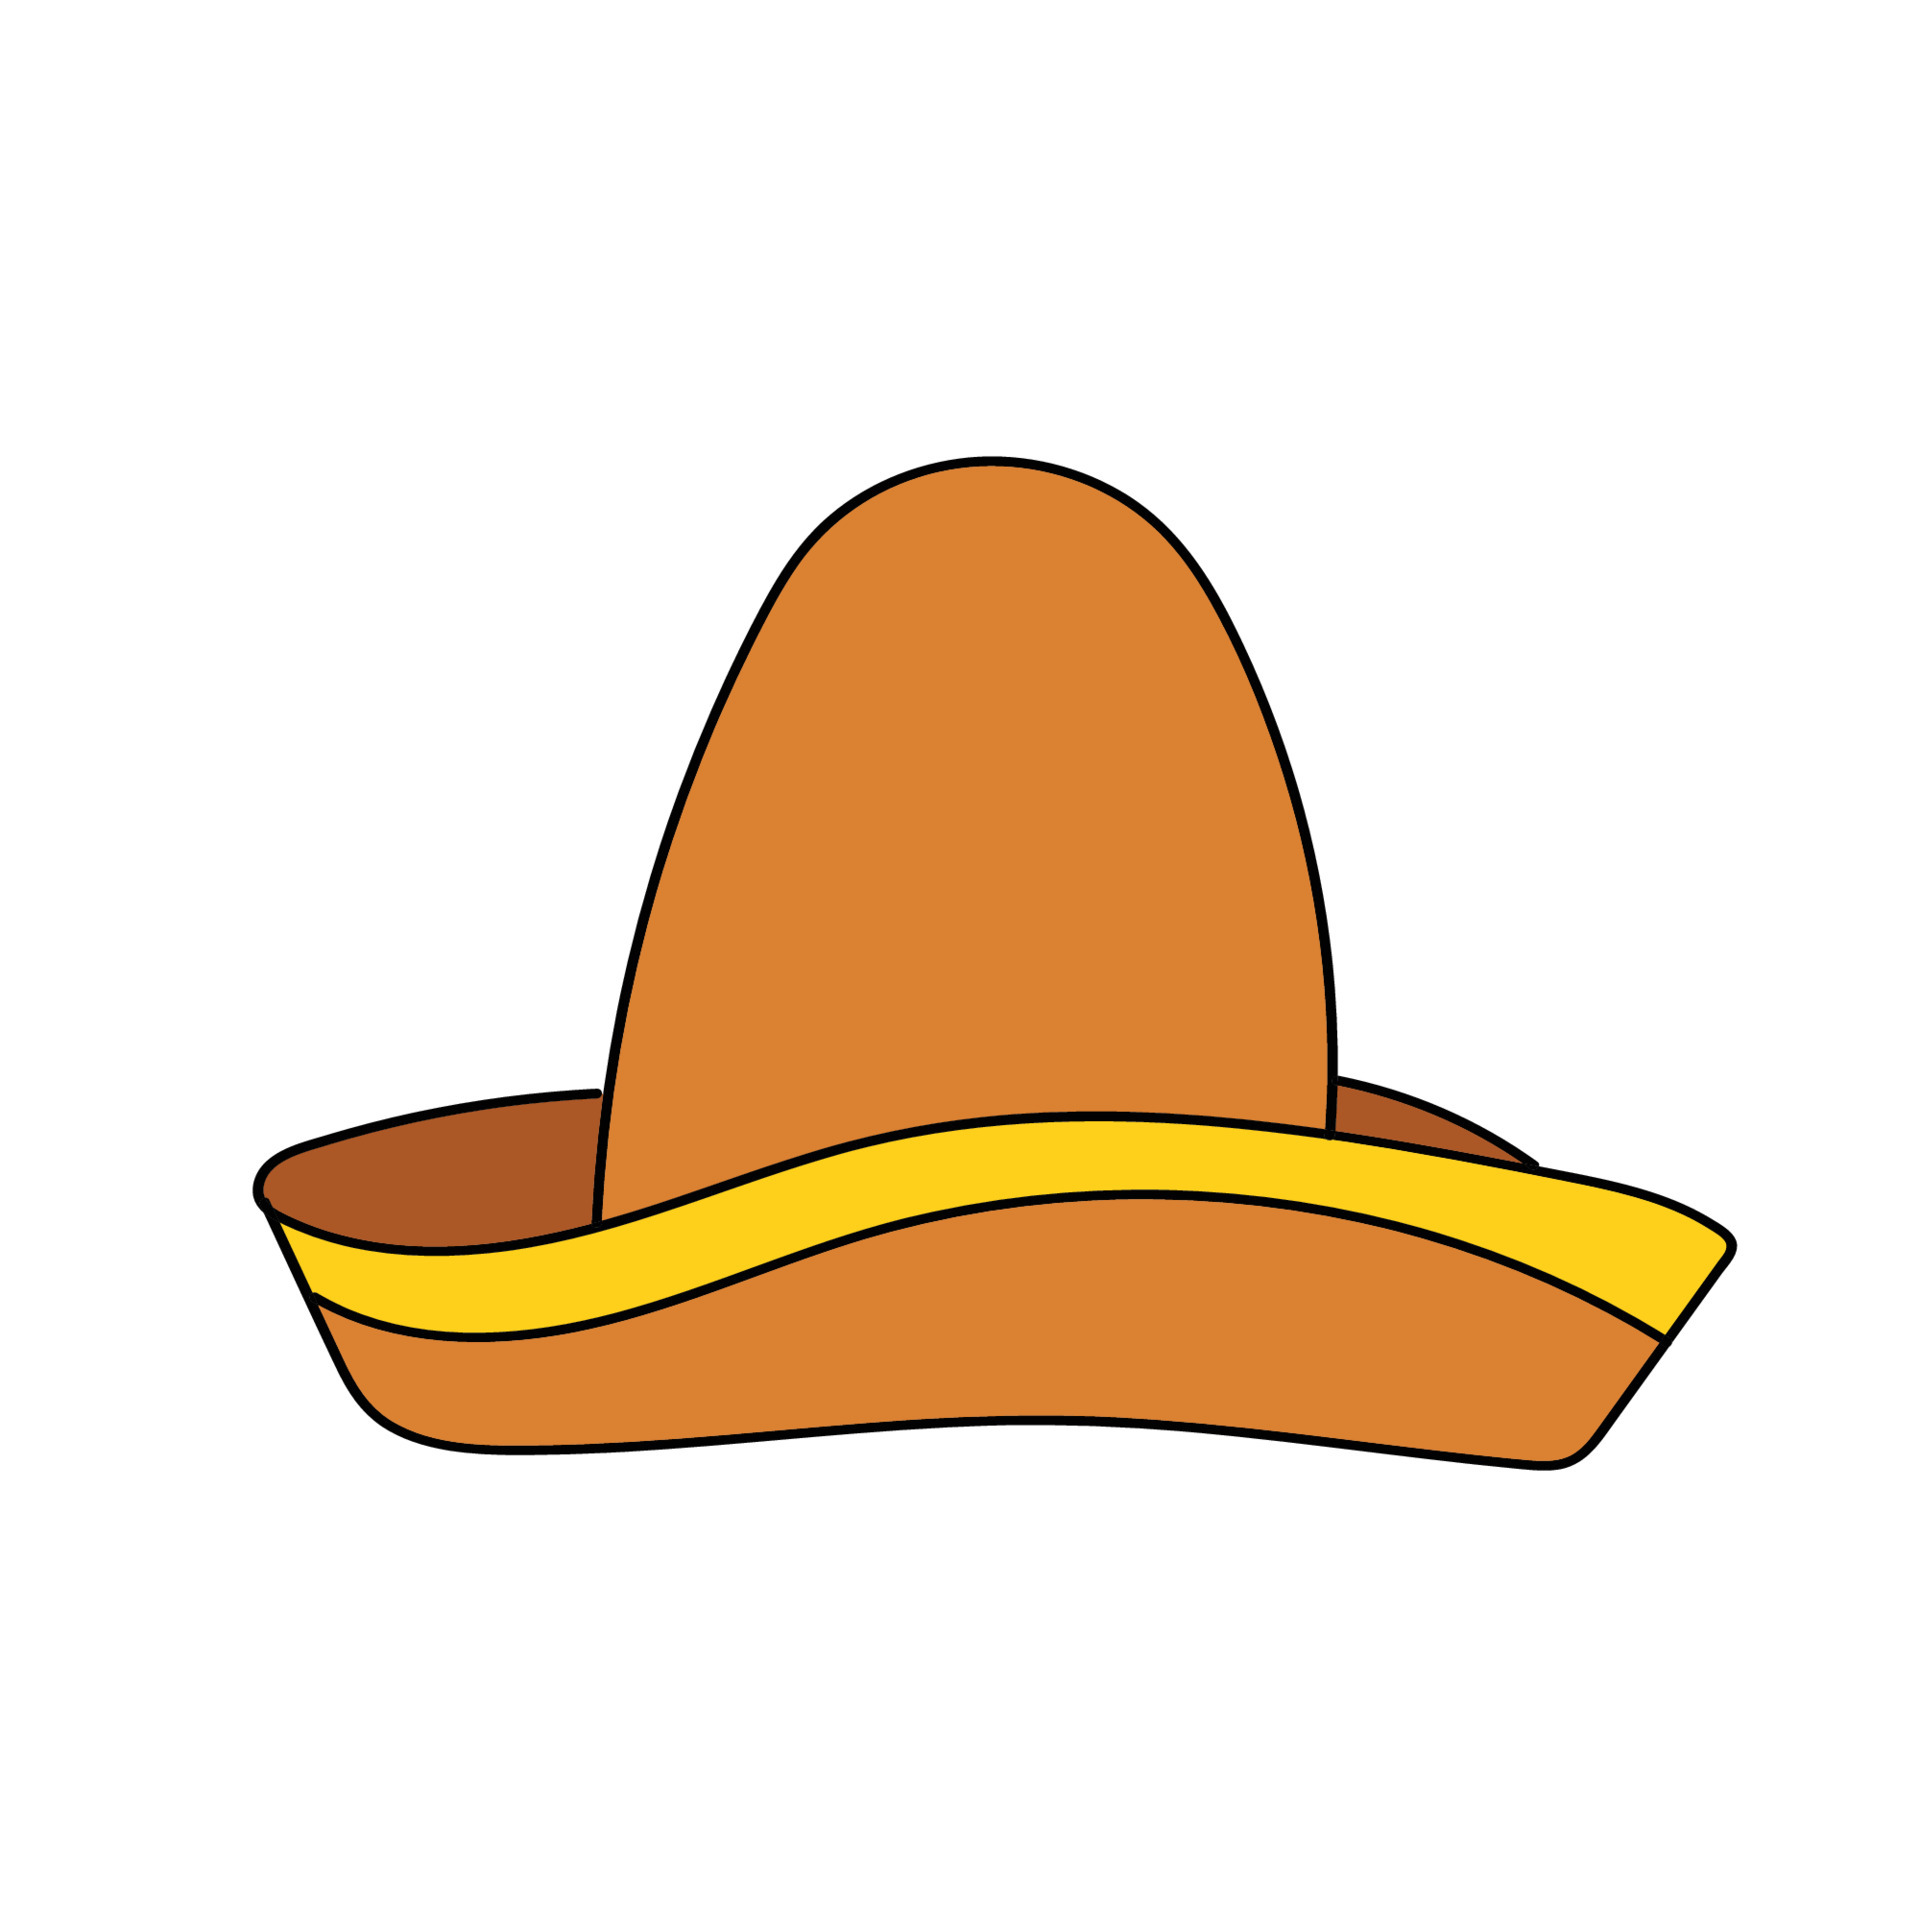 sombrero - cappello messicano 4398097 Arte vettoriale a Vecteezy